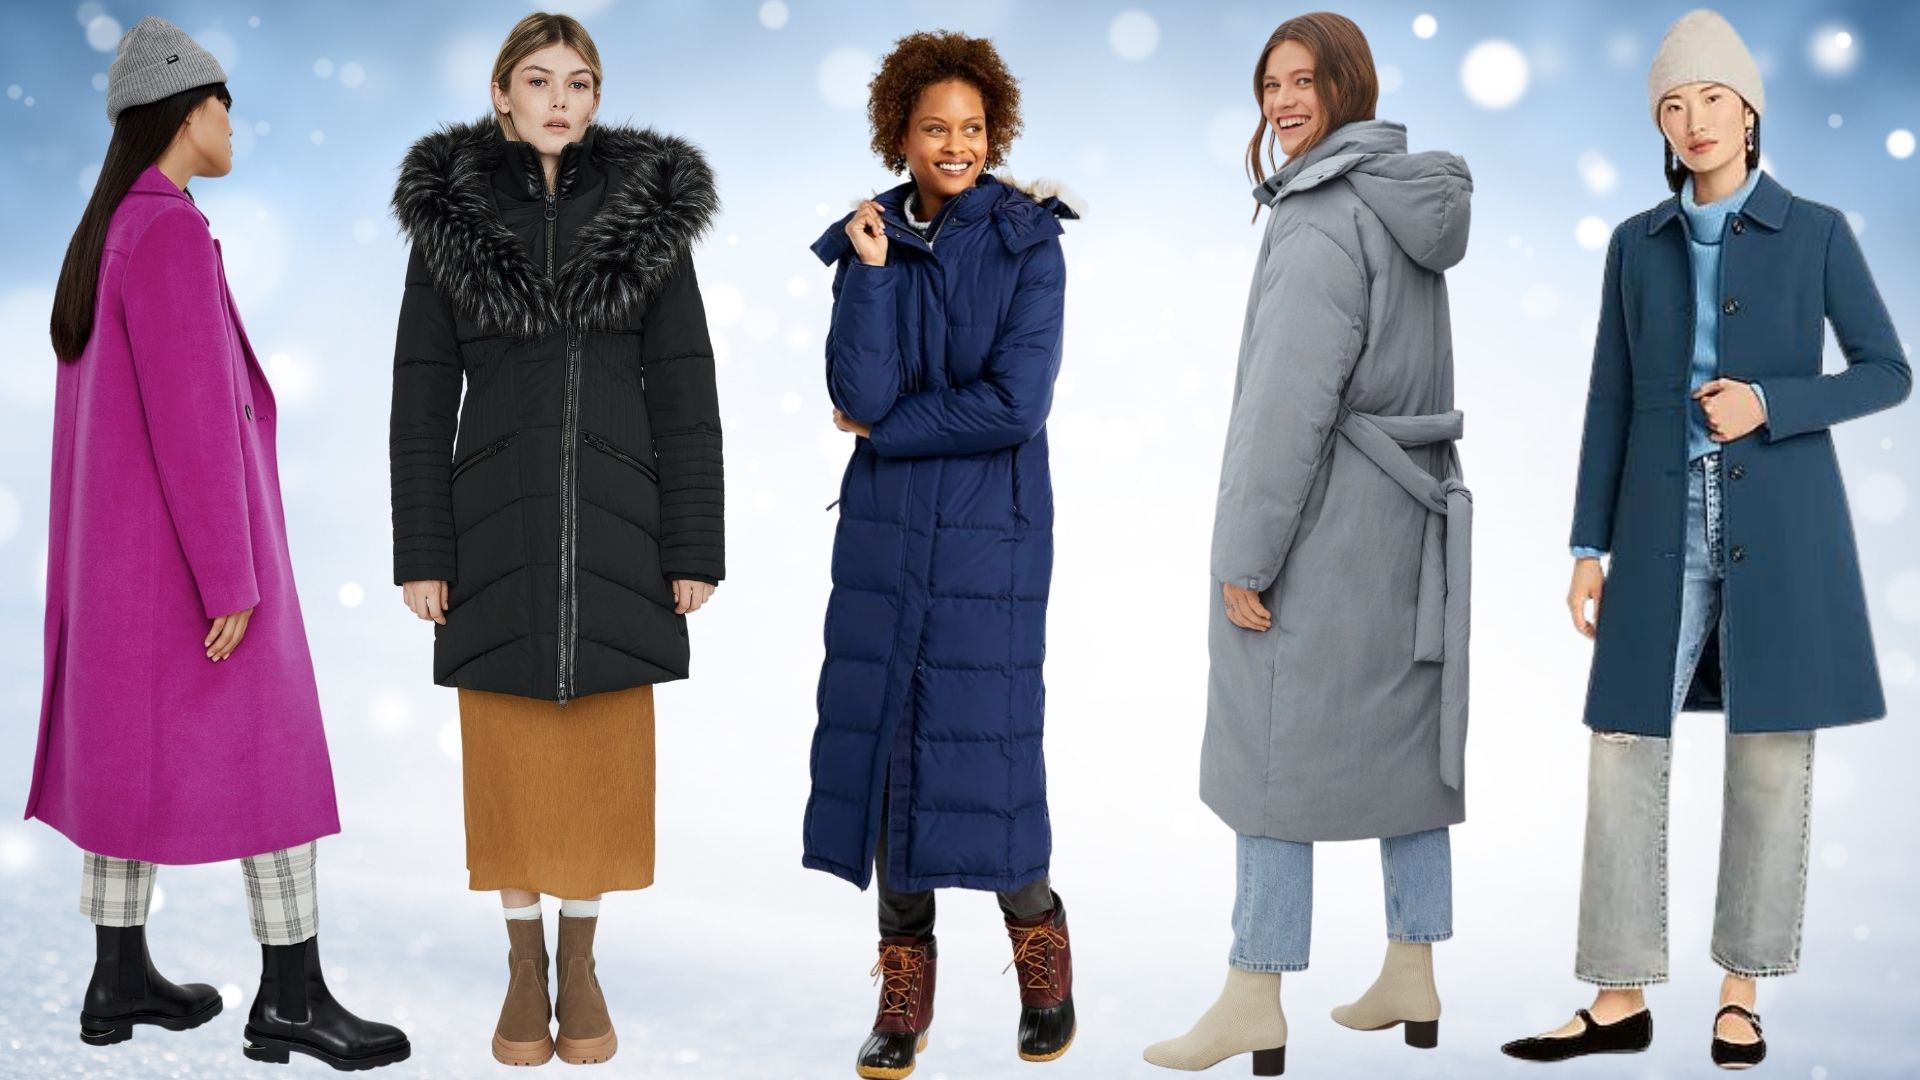 Women Wool Coat Winter Casual Solid Single Button Loose Plus Size Female Short Wool Blends